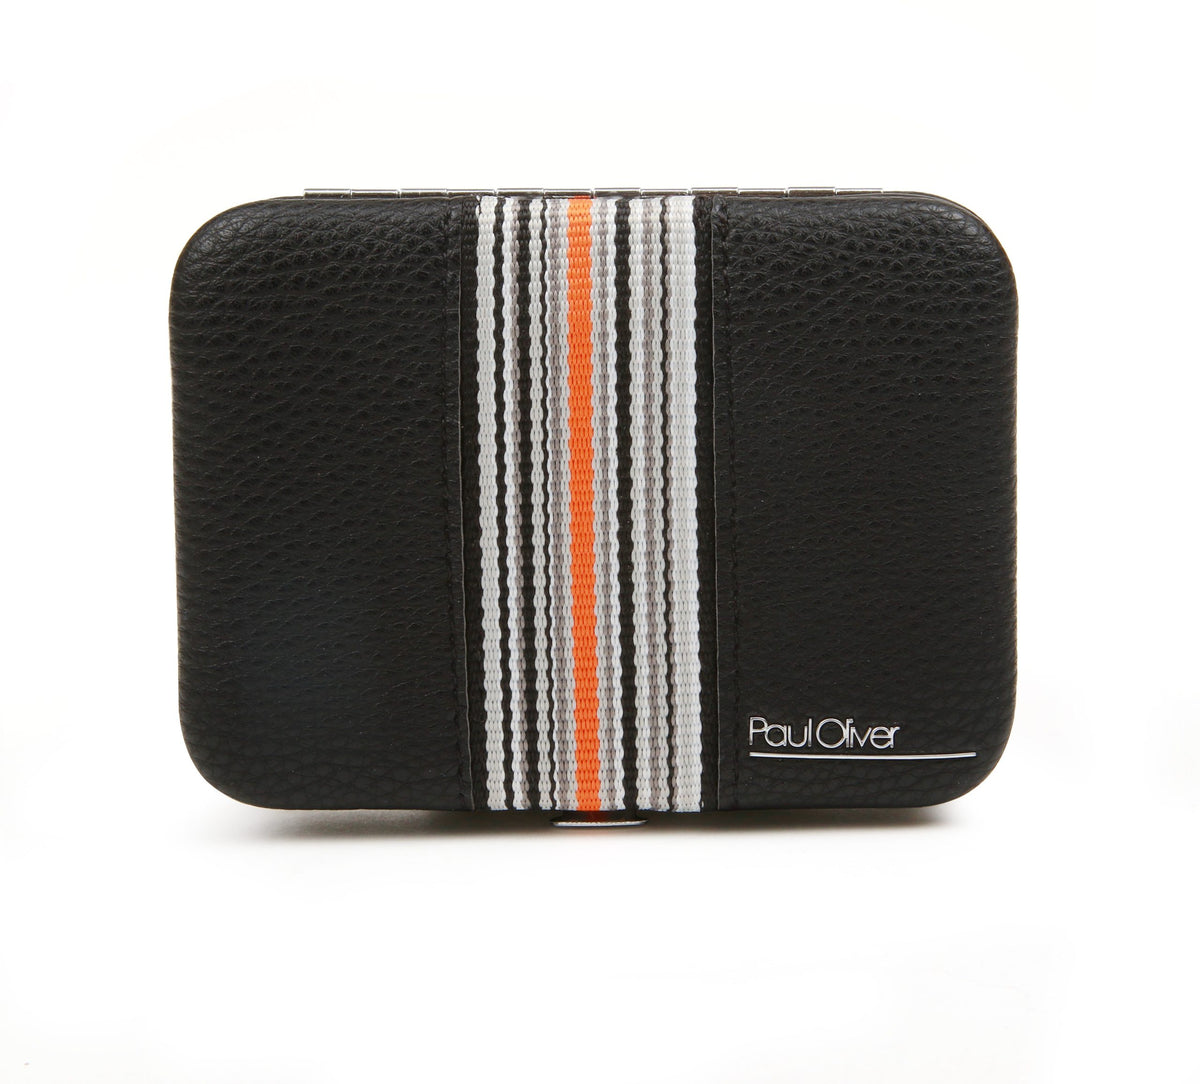 Paul Oliver 5pc Manicure Set with Orange/Black Stripe